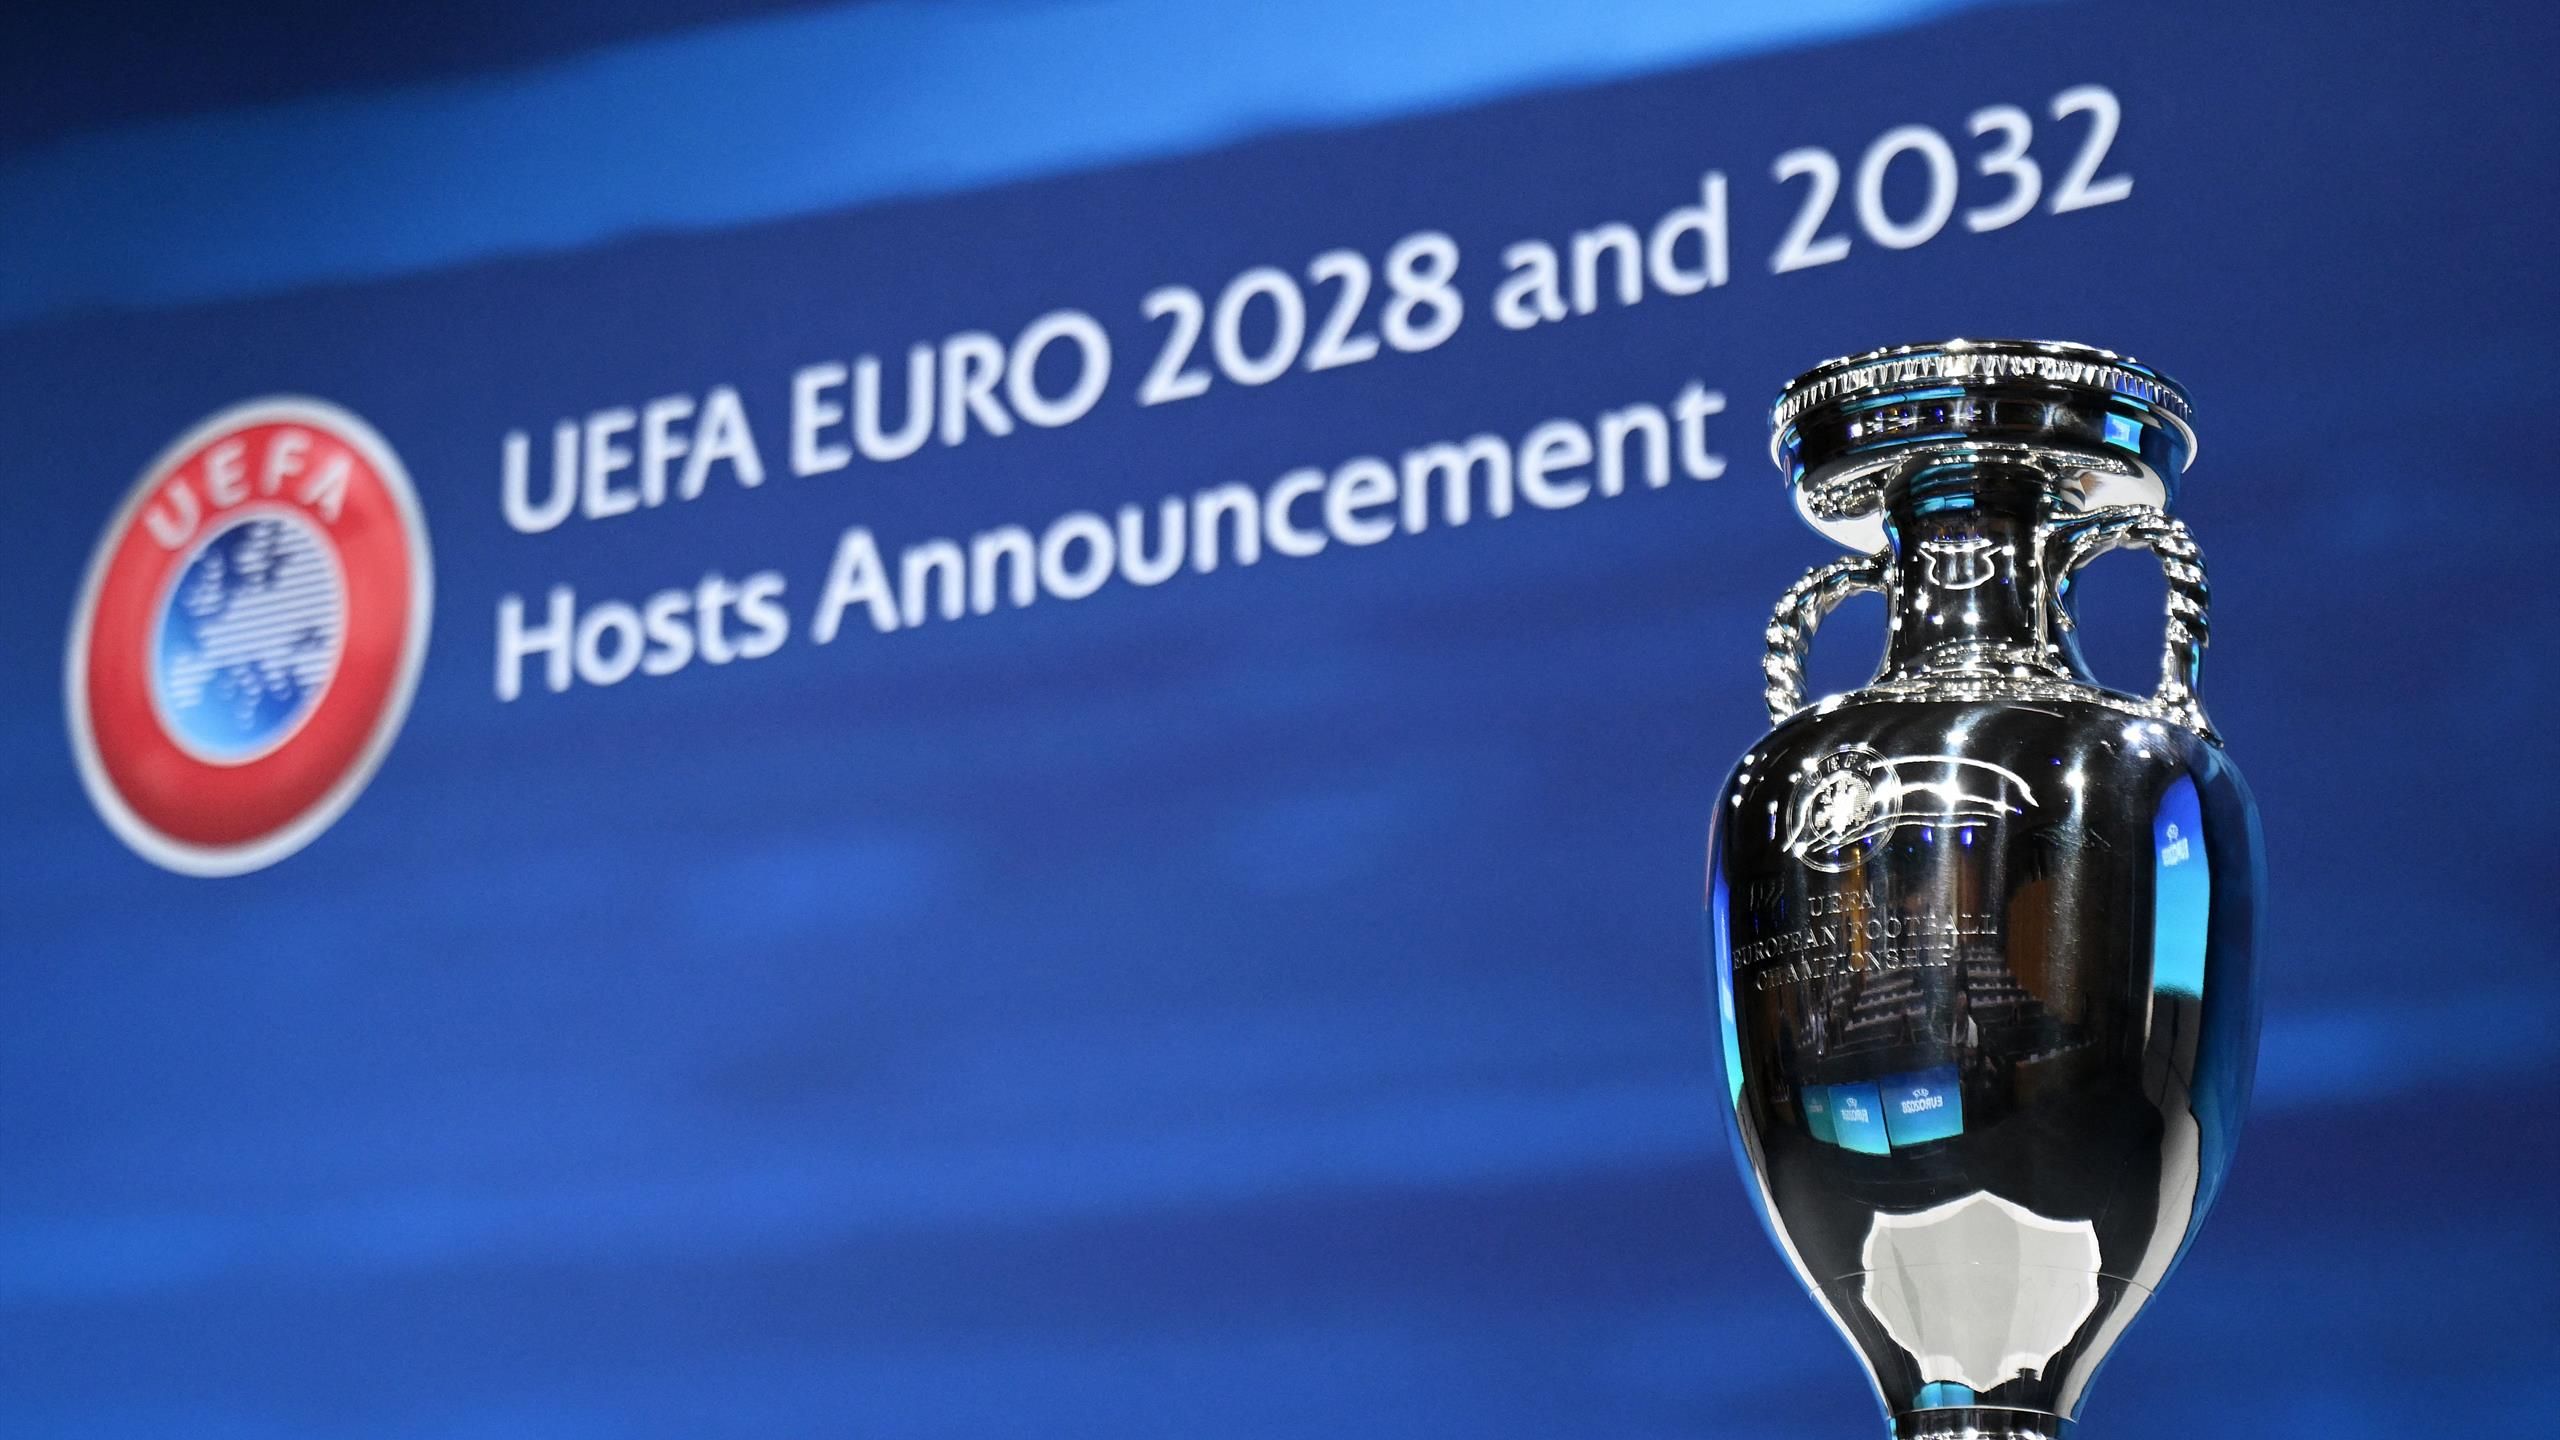 Euro 2028 |  Euro 2028 to the UK and Ireland – Italy and Turkey host Euro 2032